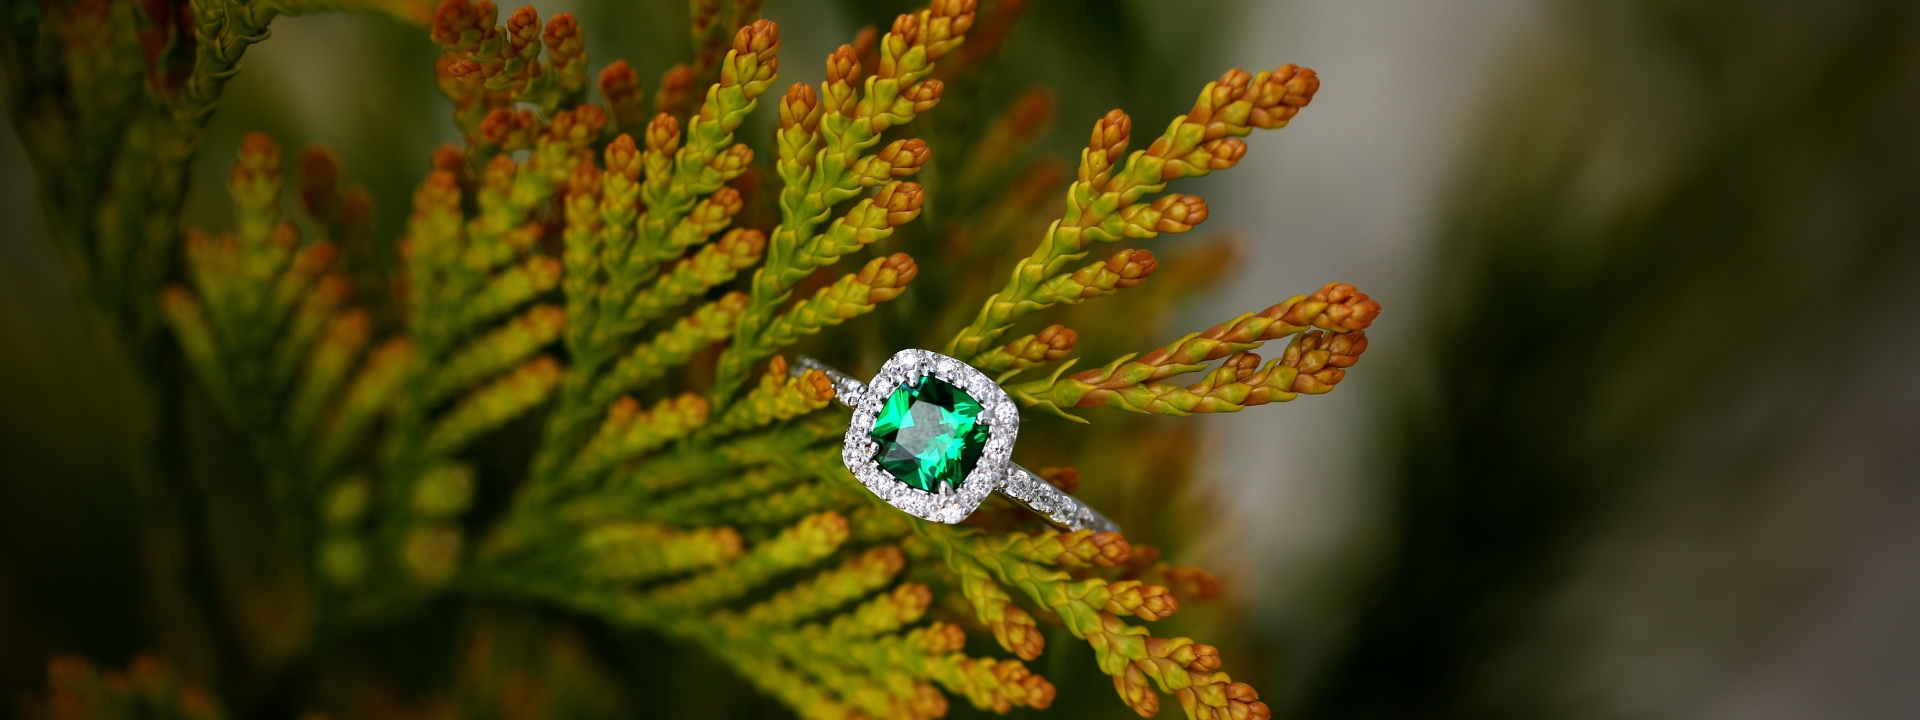 Gemstone Engagement Rings - Leo Hamel Fine Jewelers Blog